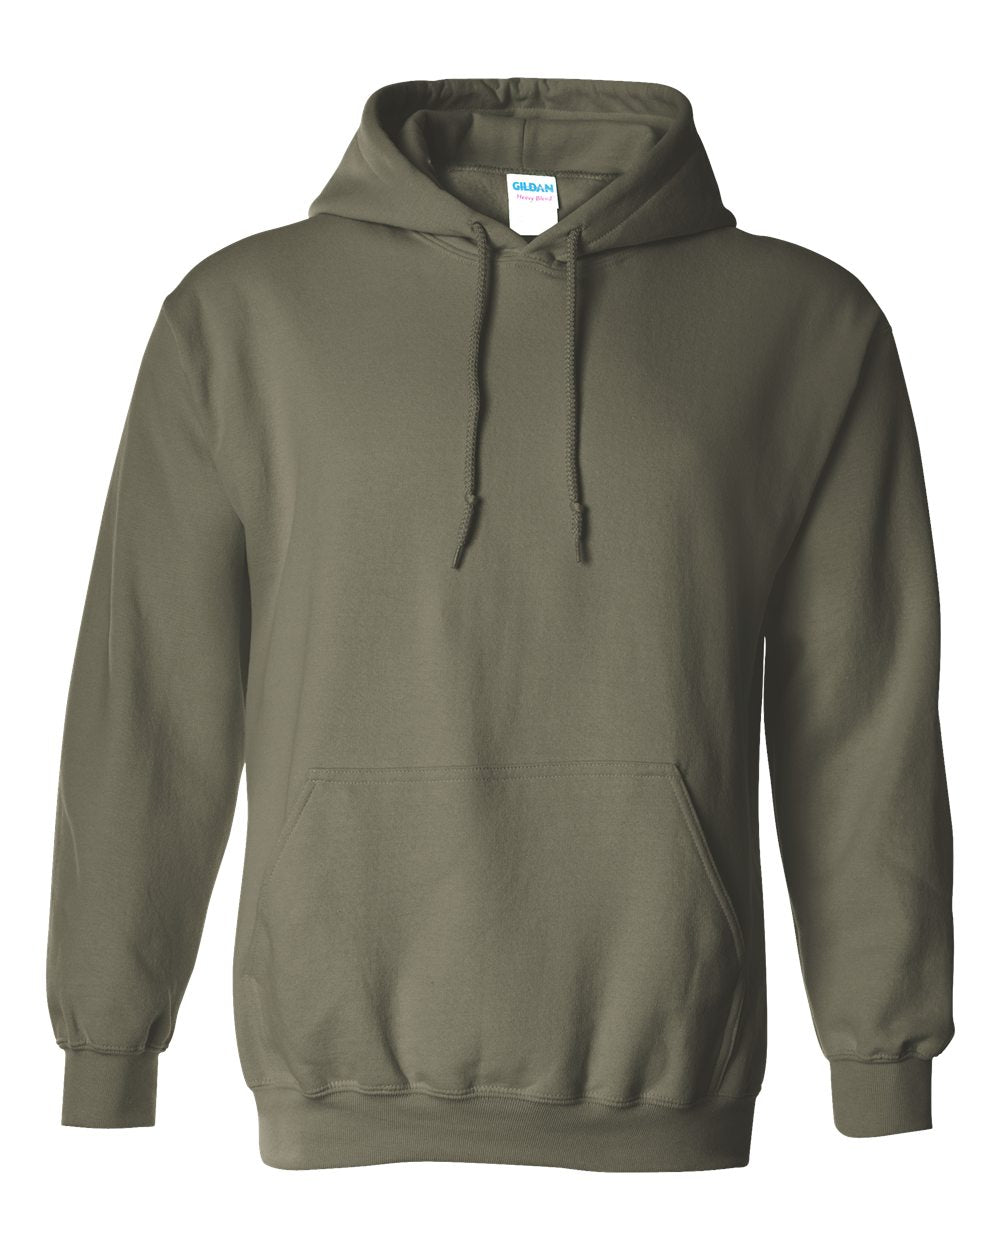 18500 Gildan: "Heavy Blend"  Hooded Sweatshirt